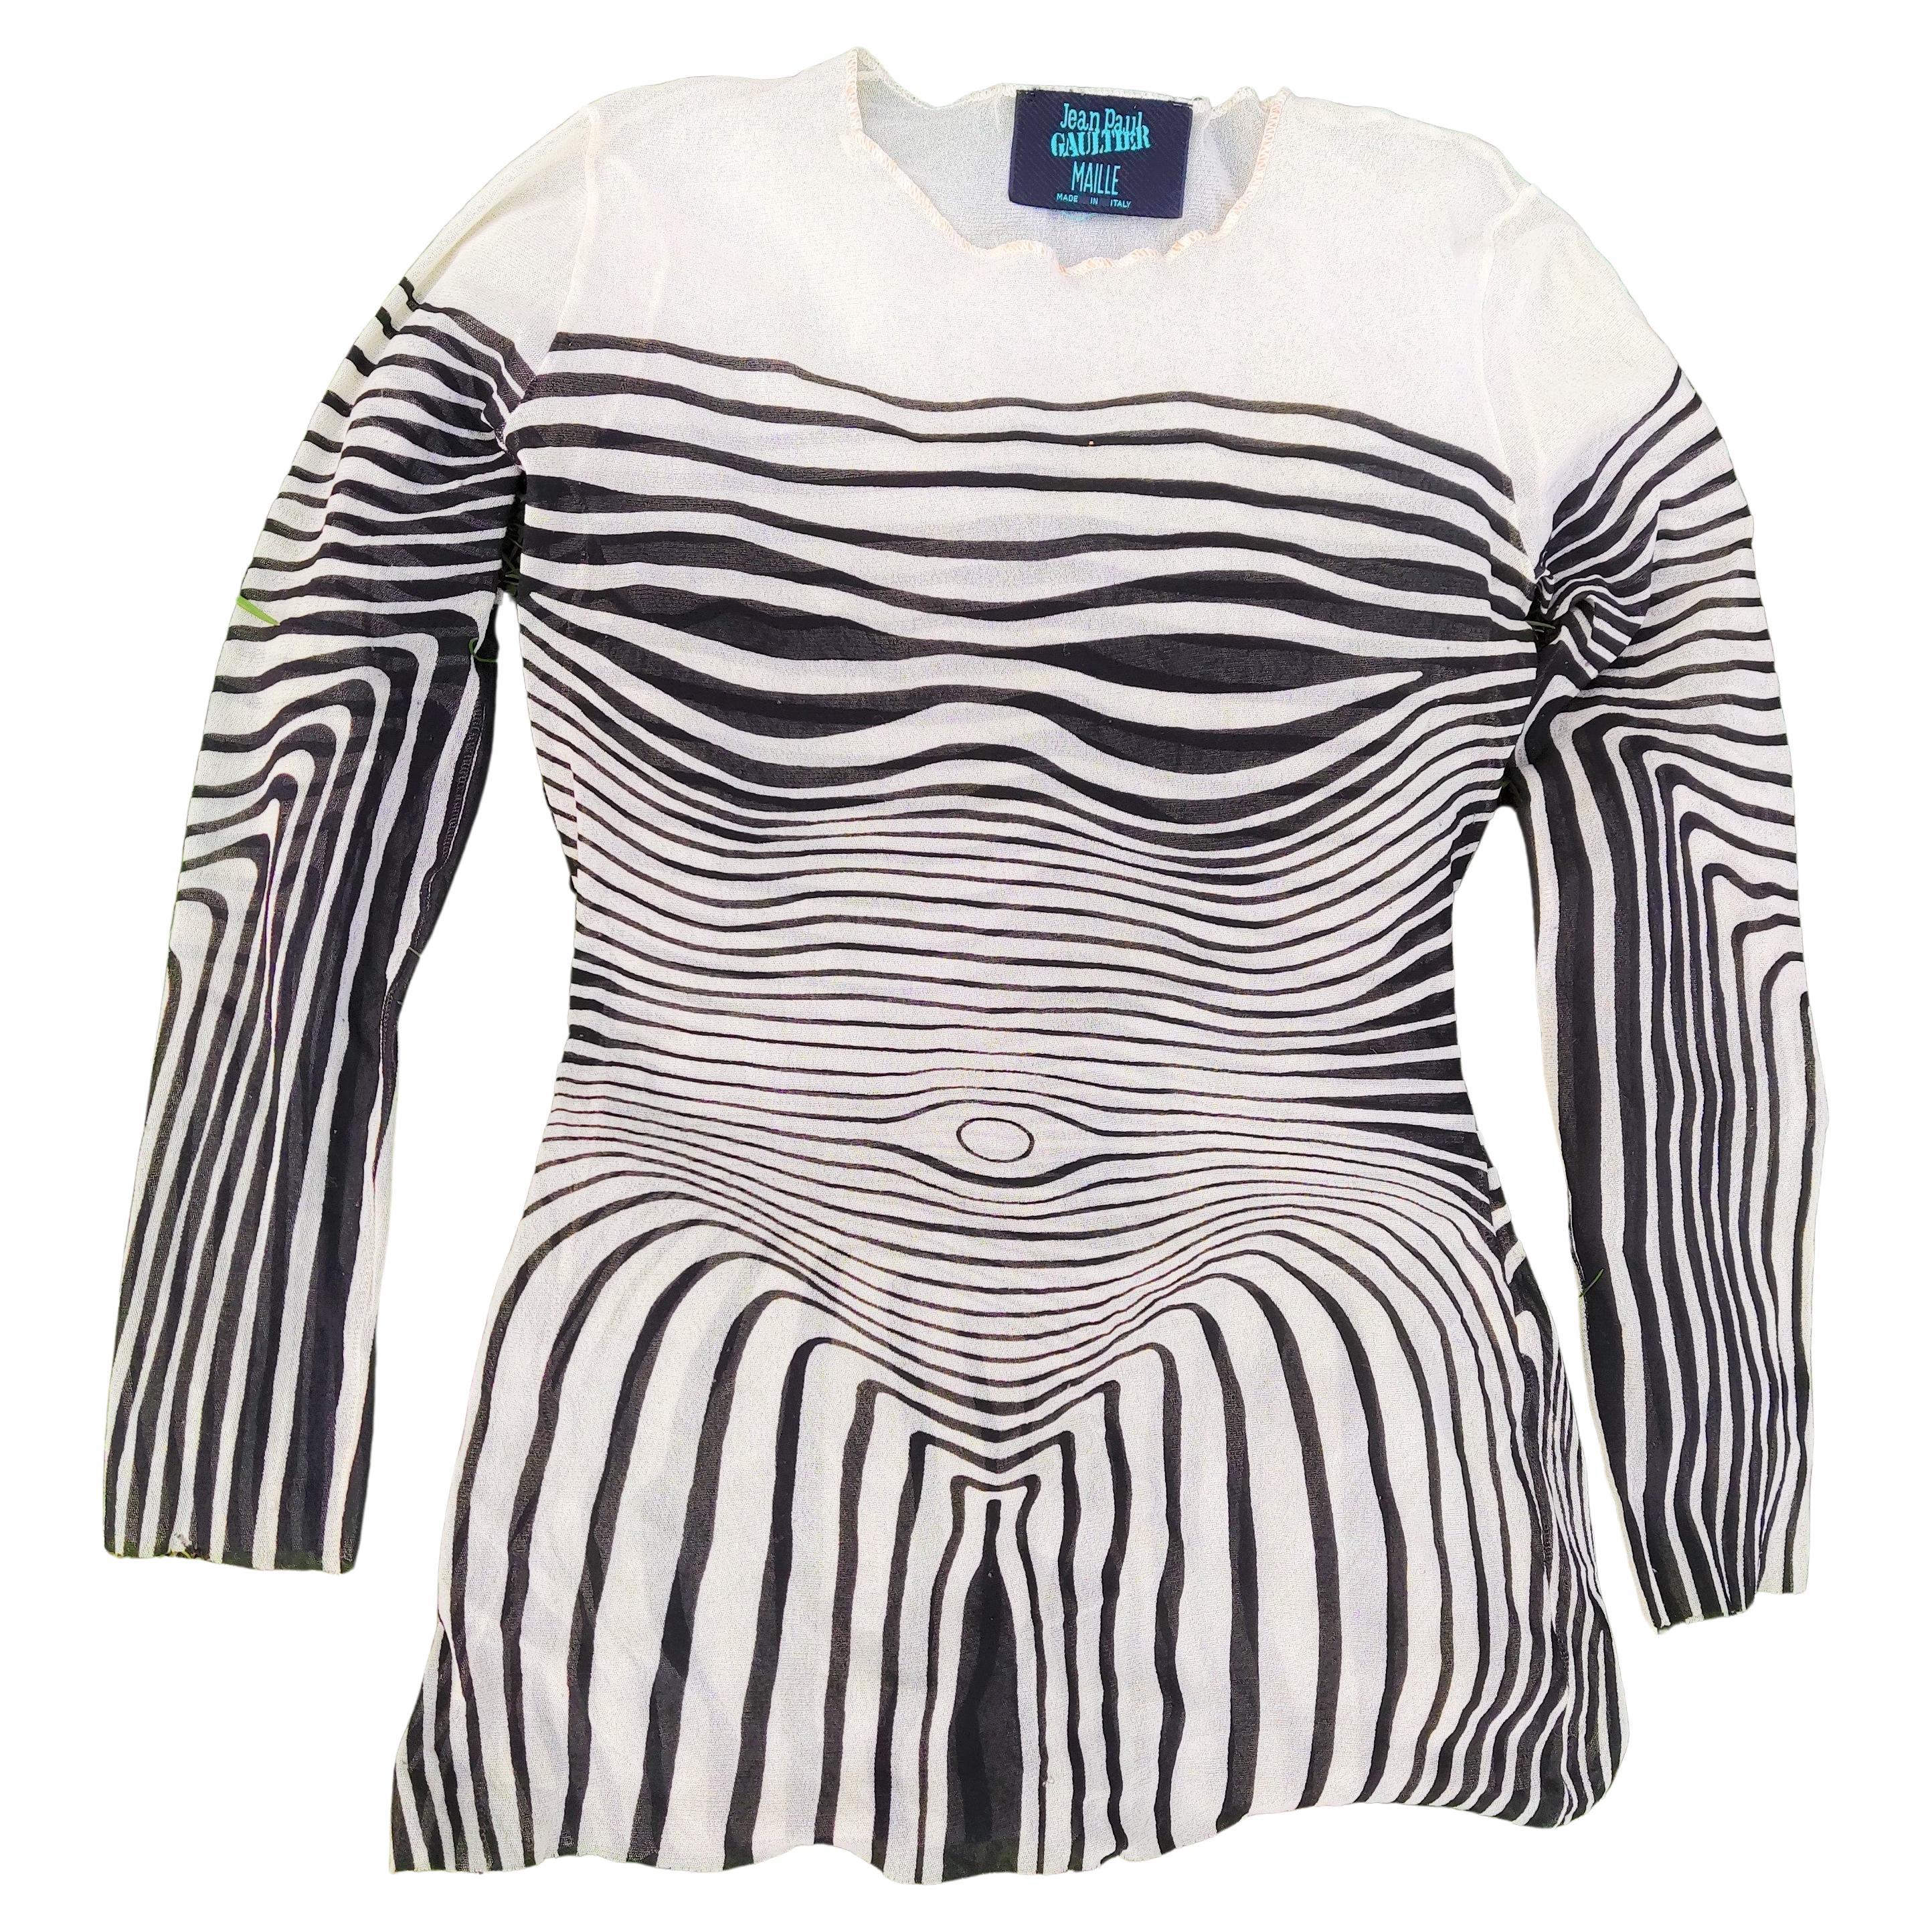 Jean Paul Gaultier Cyberbaba Zebra Optical Illusion Striped Transparent Mesh Top